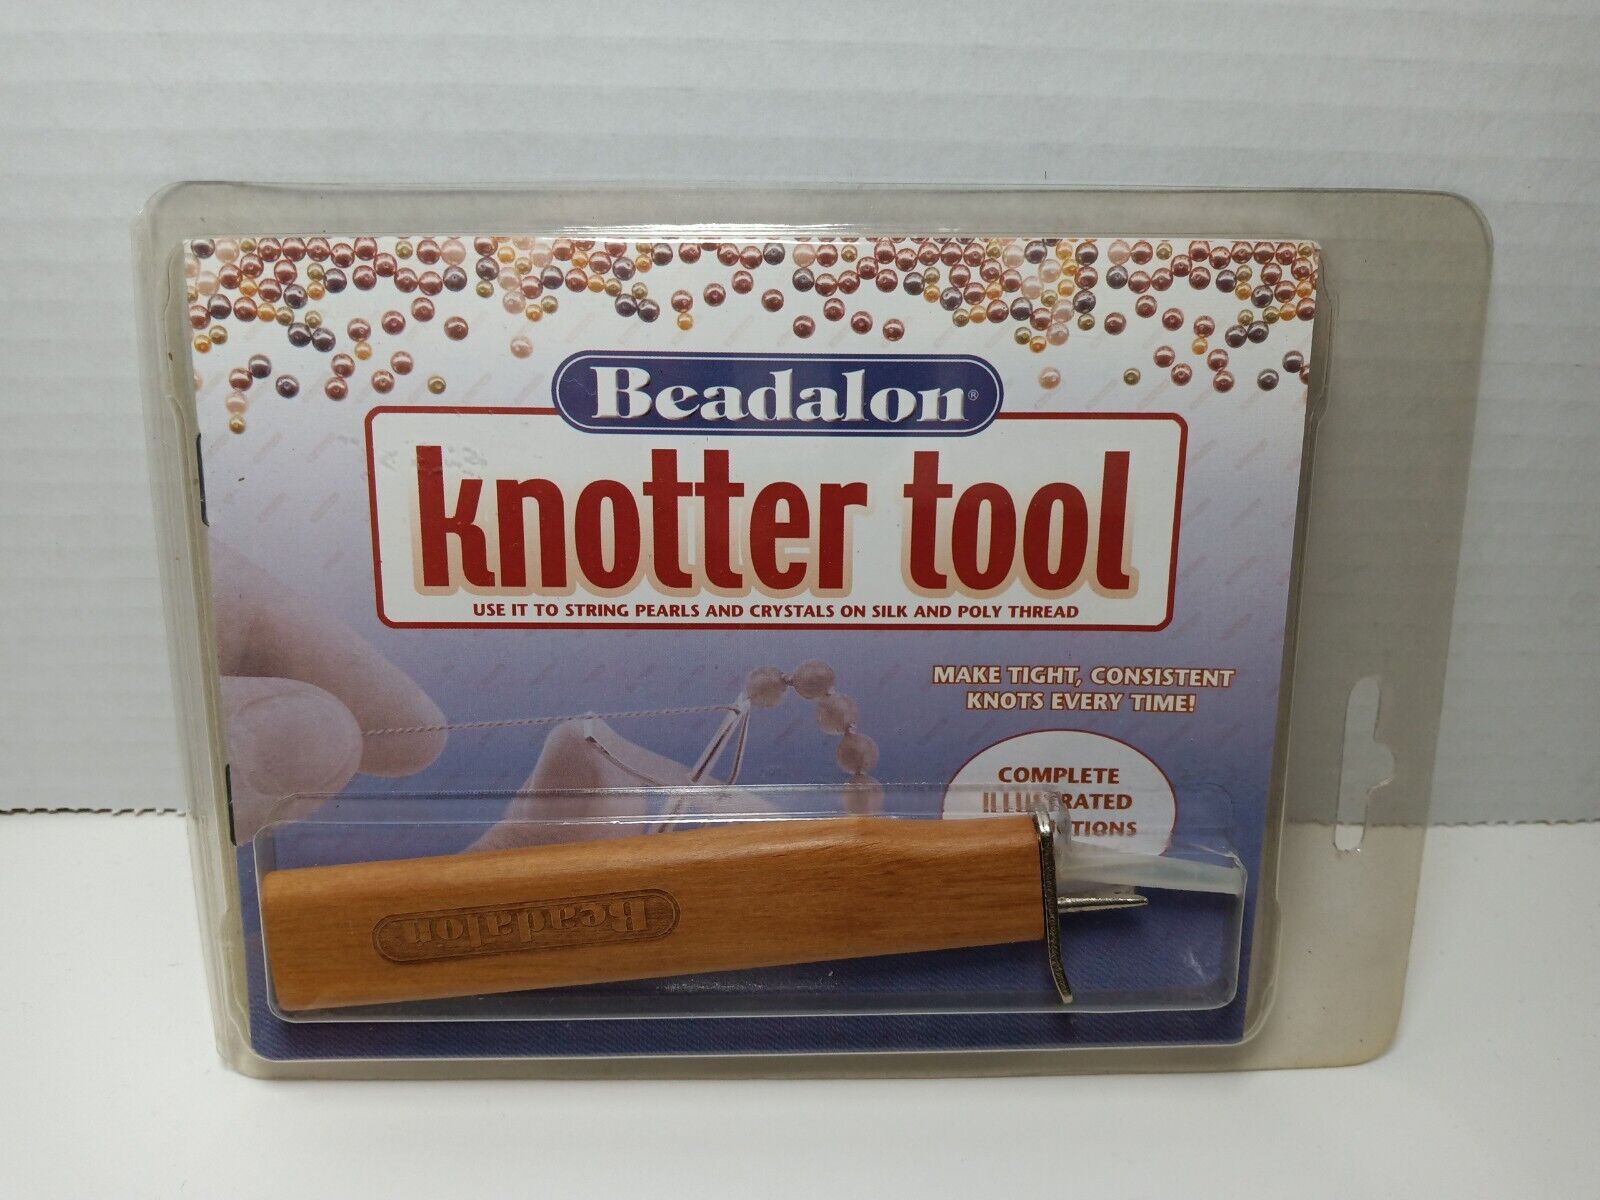 Beadalon Knotter Tool Model: Jteconknot Jewelry Hand Tool